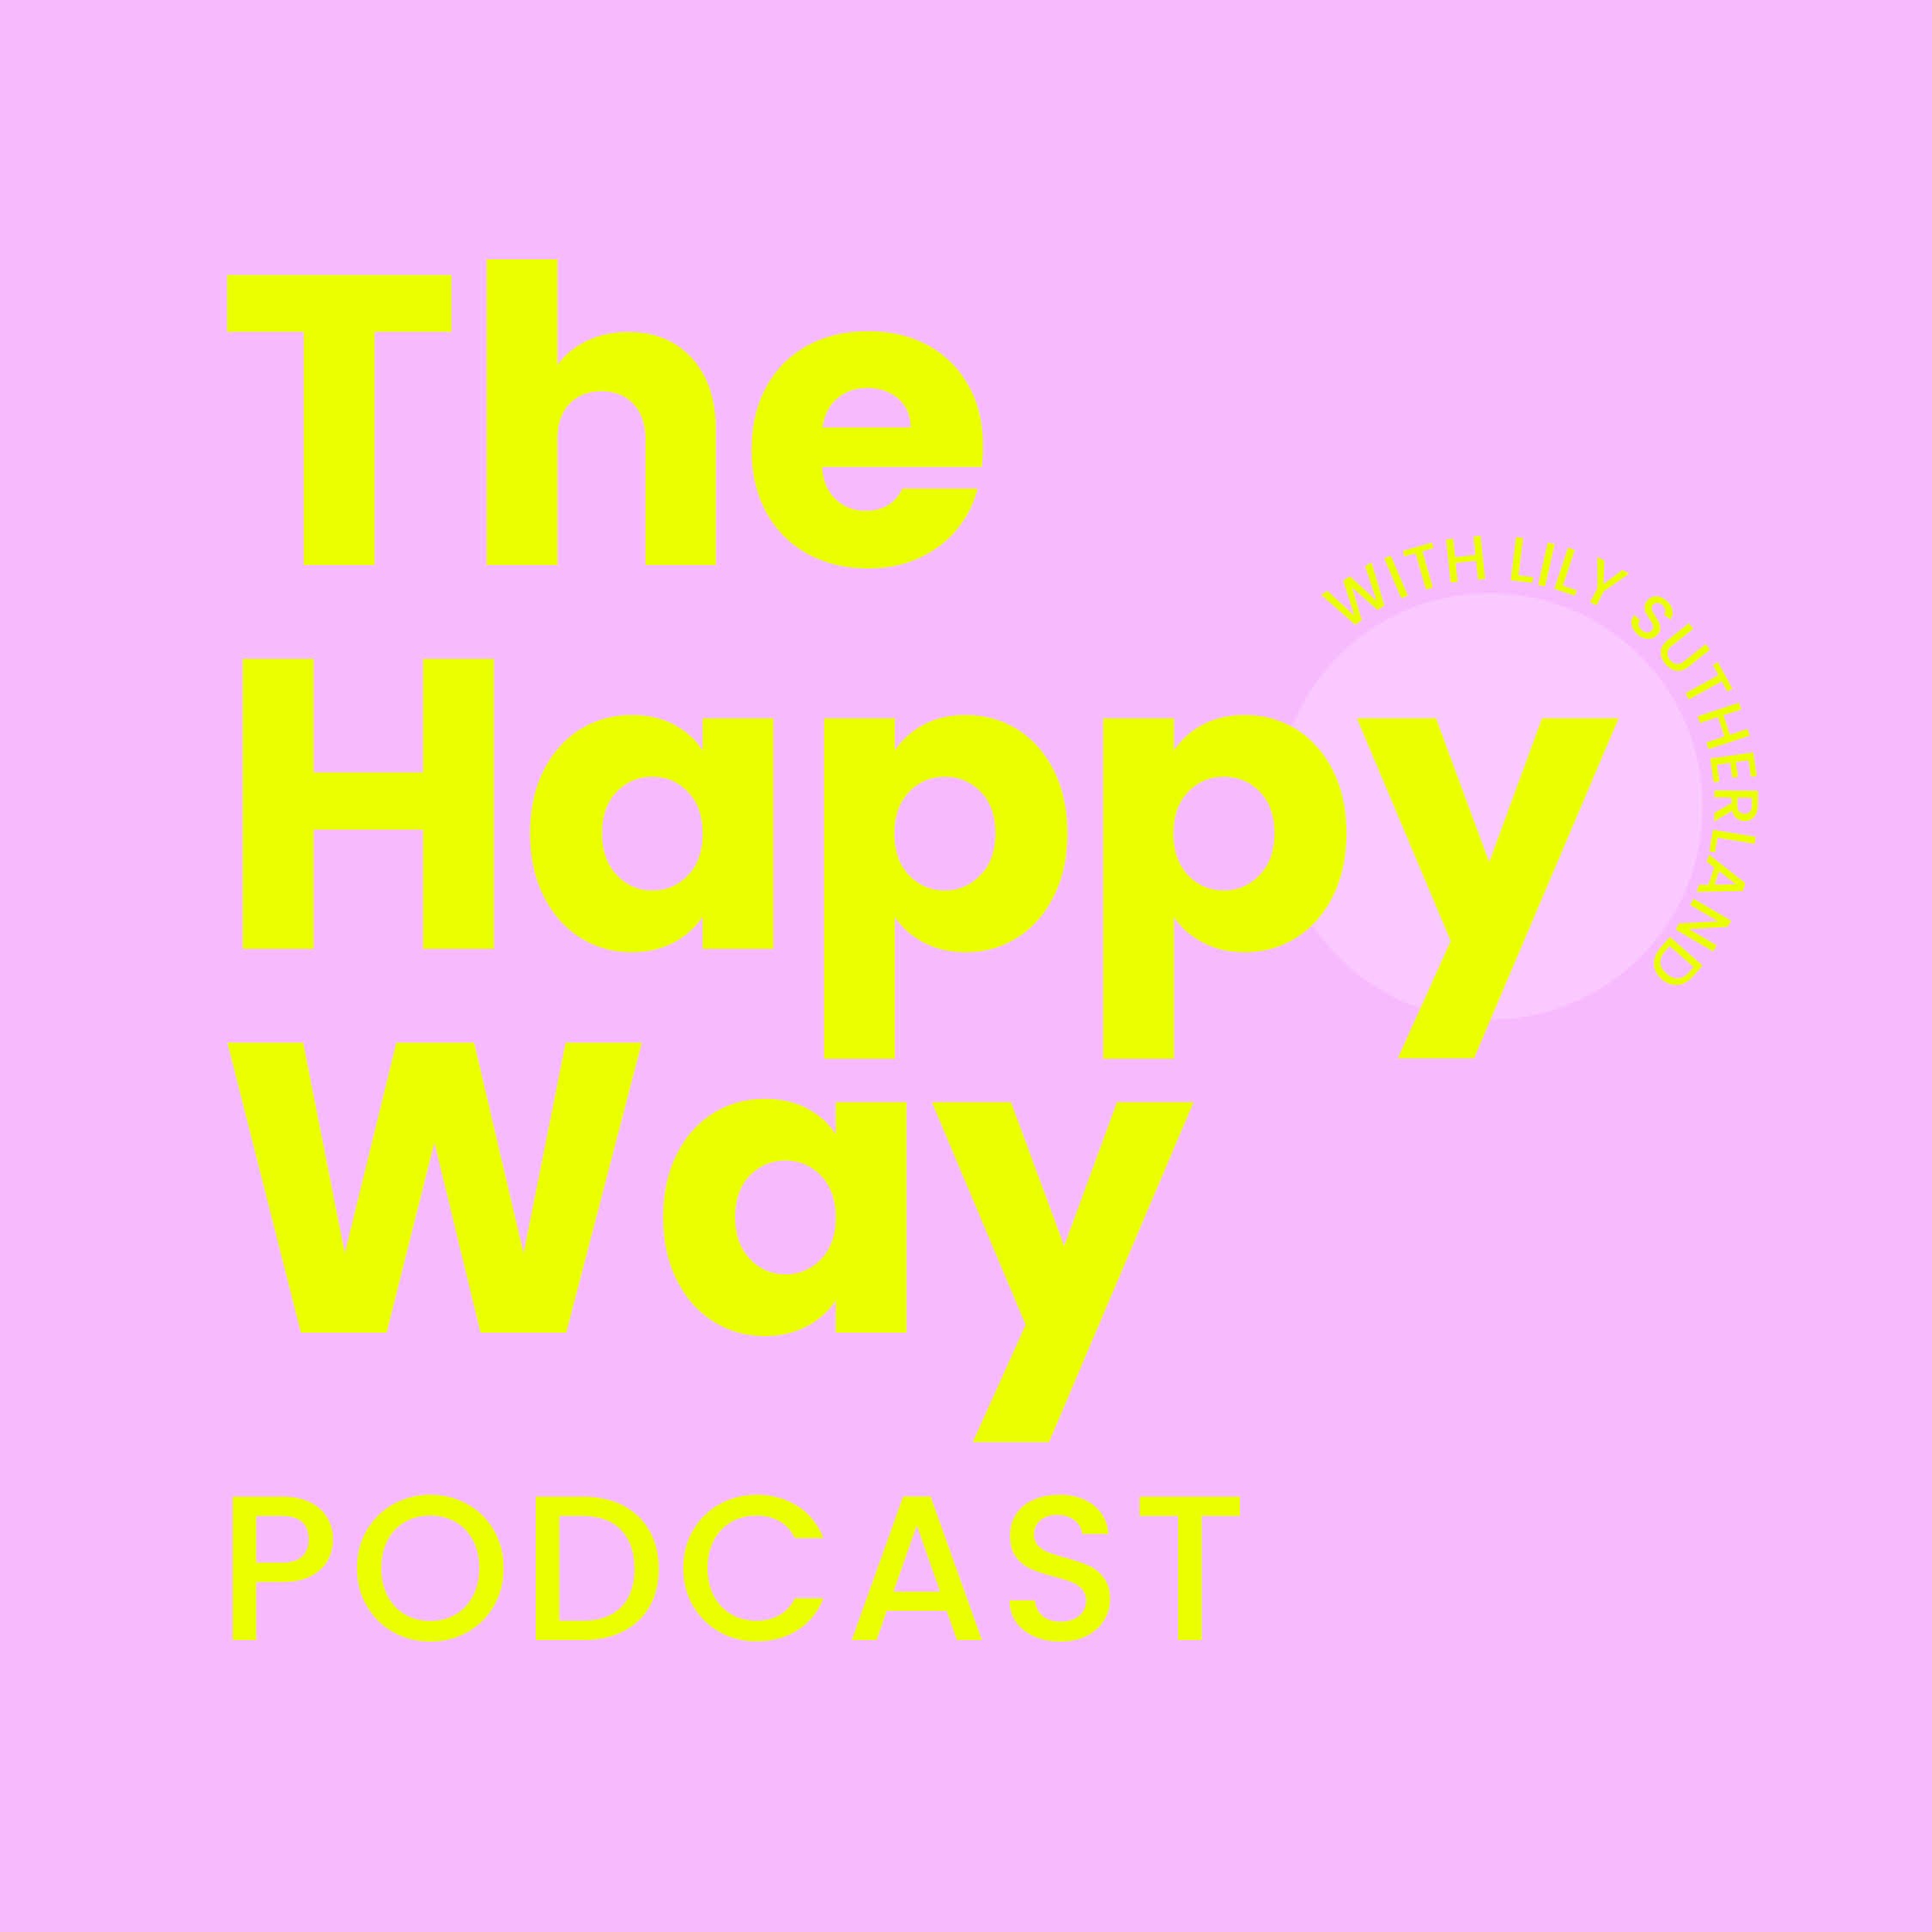 The Happy Way Podcast